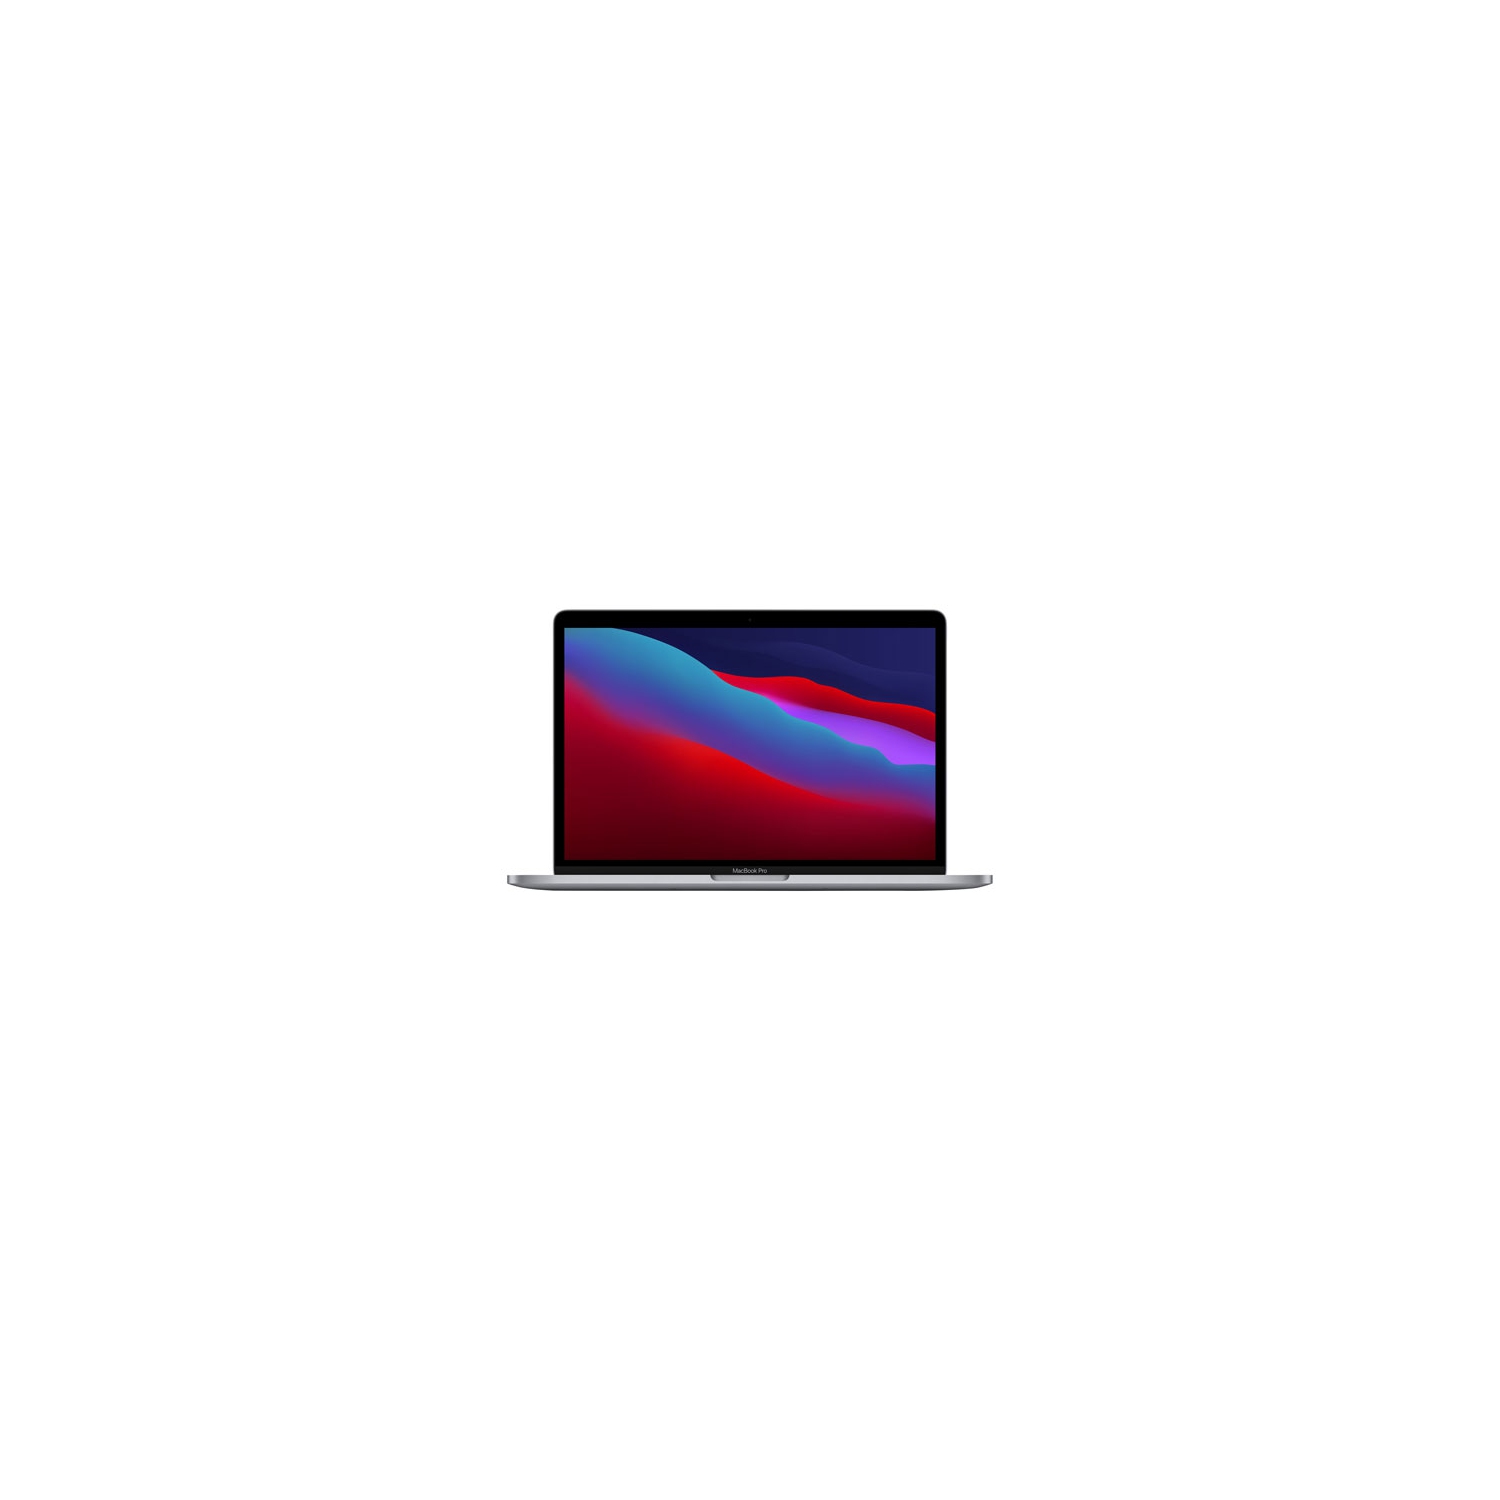 Refurbished (Good) - Apple MacBook Pro (Fall 2020) 13.3" w/ Touch Bar - Space Grey (Apple M1 Chip / 512GB SSD / 8GB RAM) - En